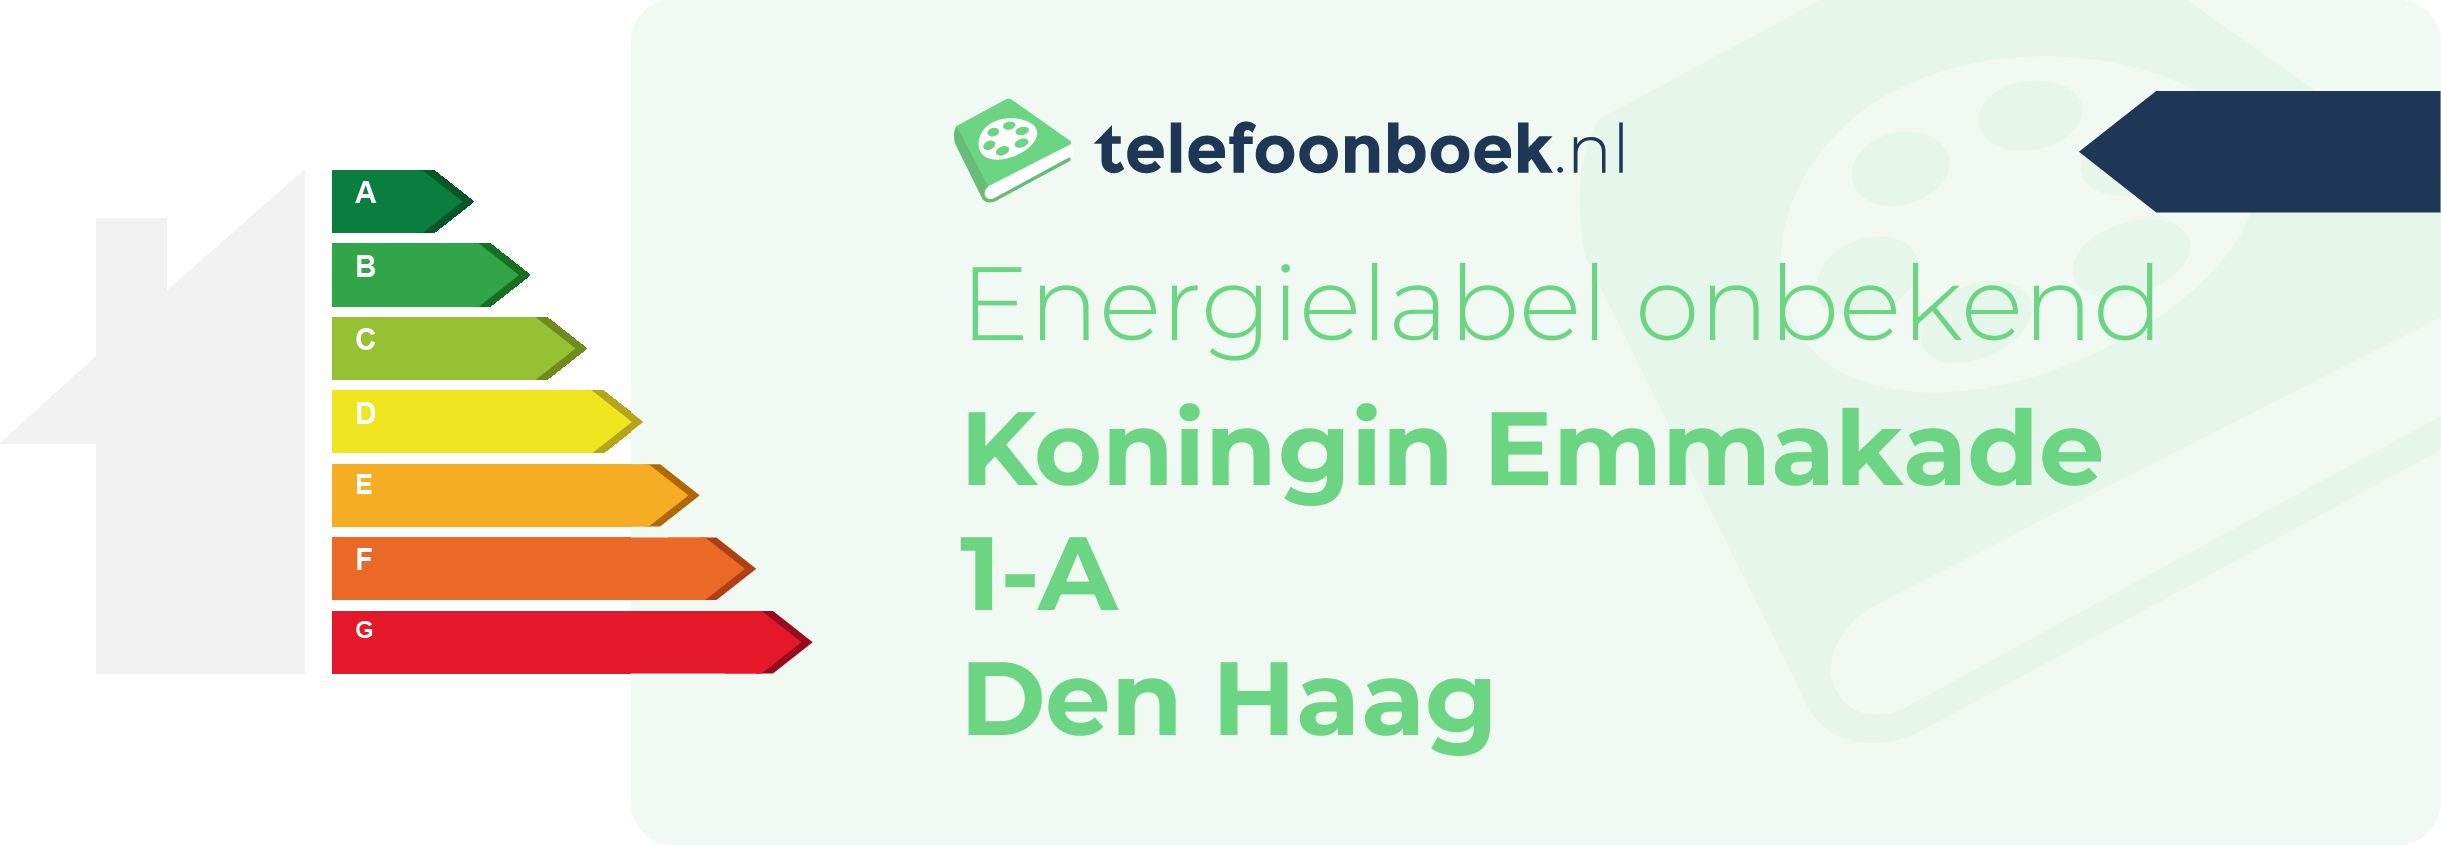 Energielabel Koningin Emmakade 1-A Den Haag